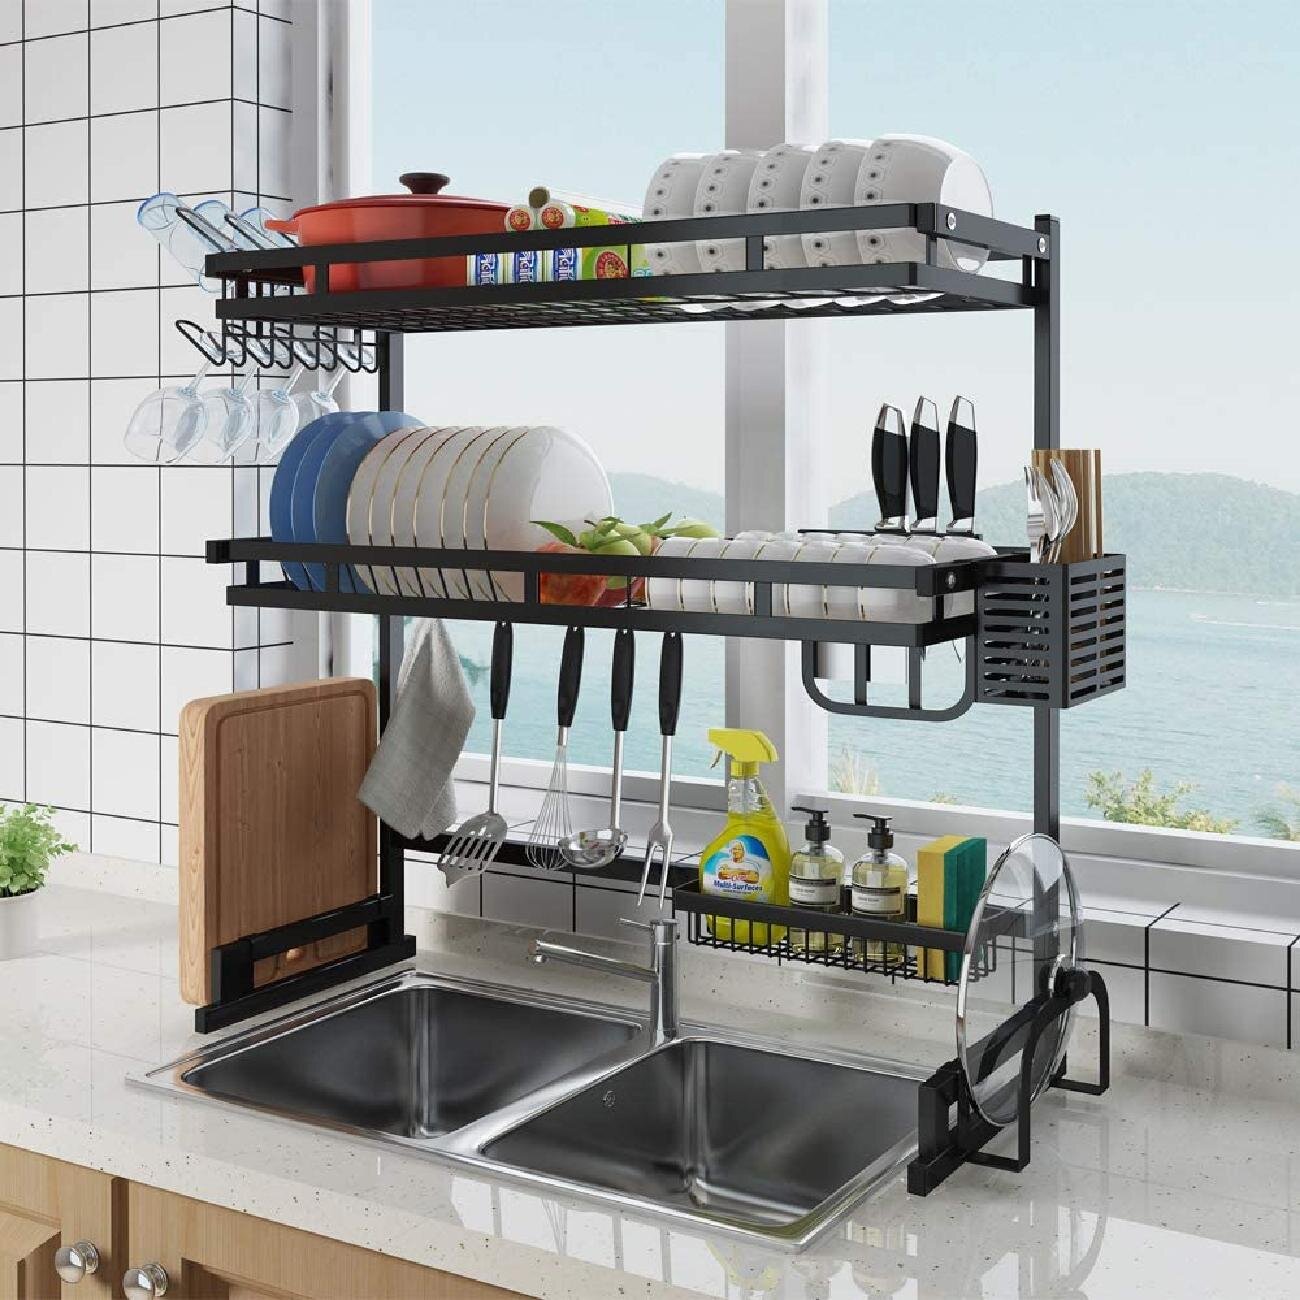 Dish Drying Rack Organizer Kitchen Stainless Steel Cutlery Holder Drainer Shelf 